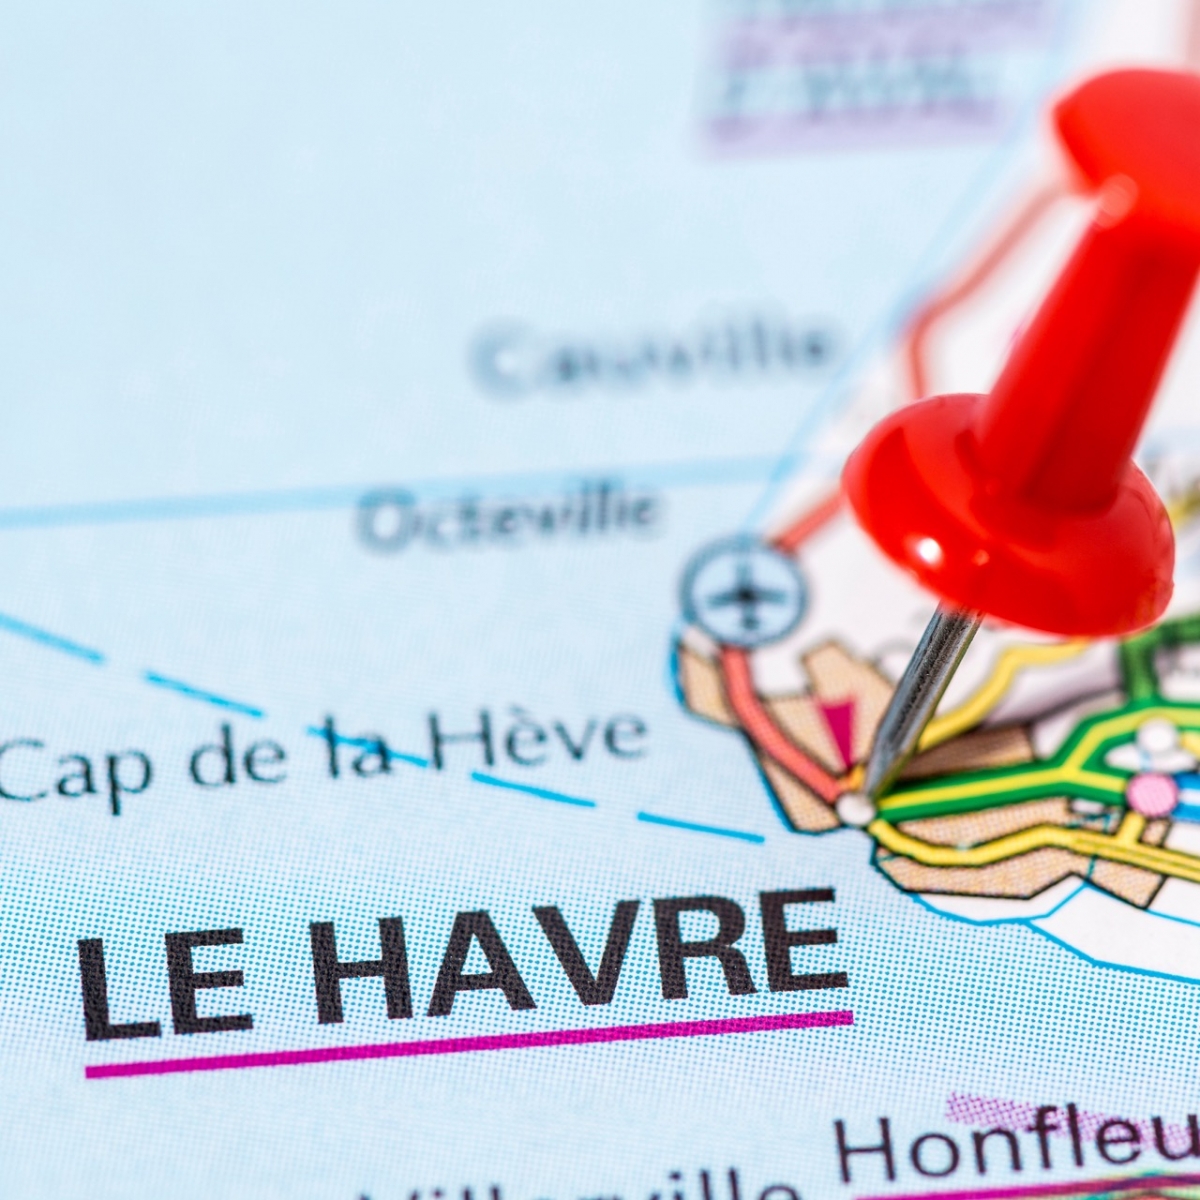 Le Havre, Normandie sur la carte